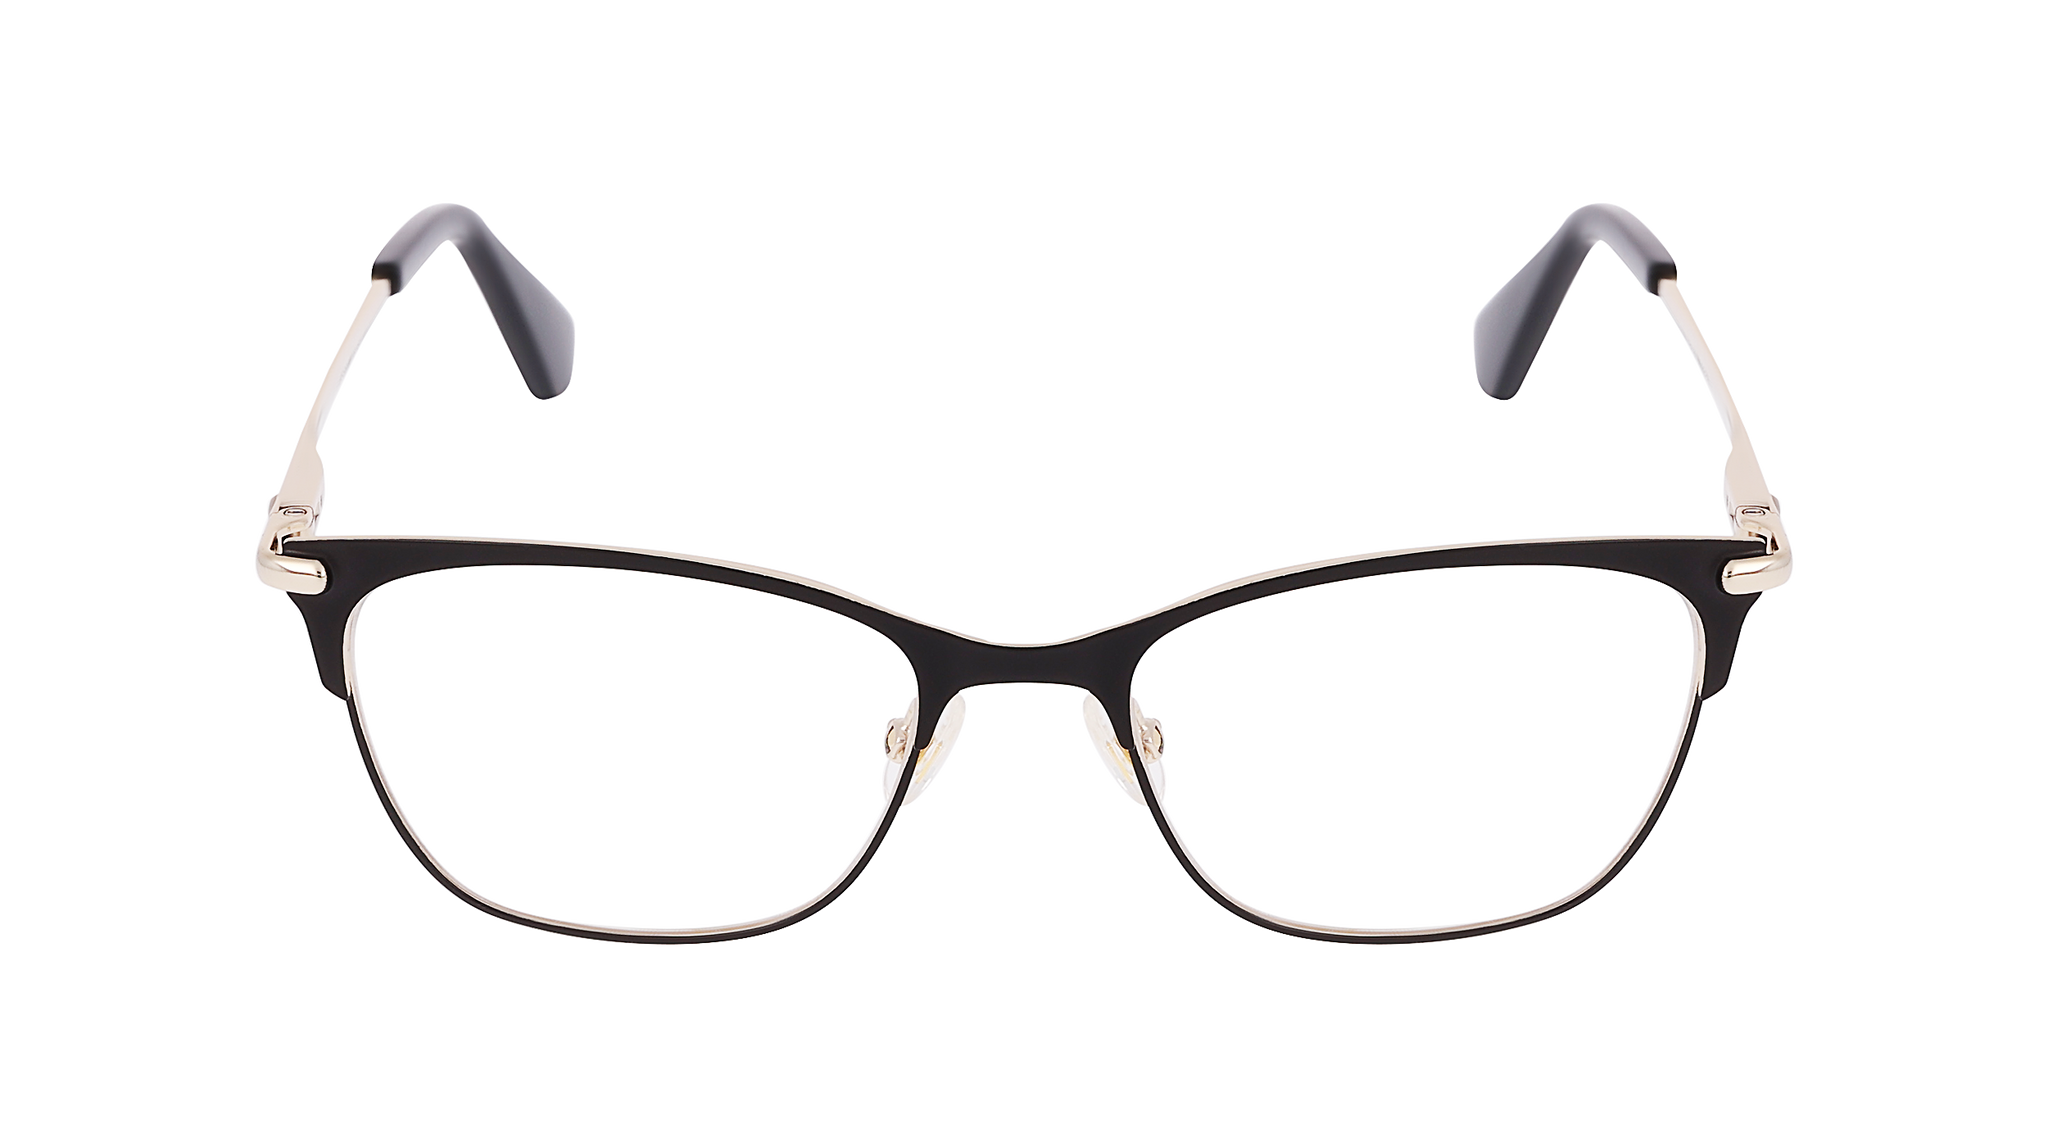 Kate Spade BENDALL 807 Glasses Frames Ausralia | 1001 Optical